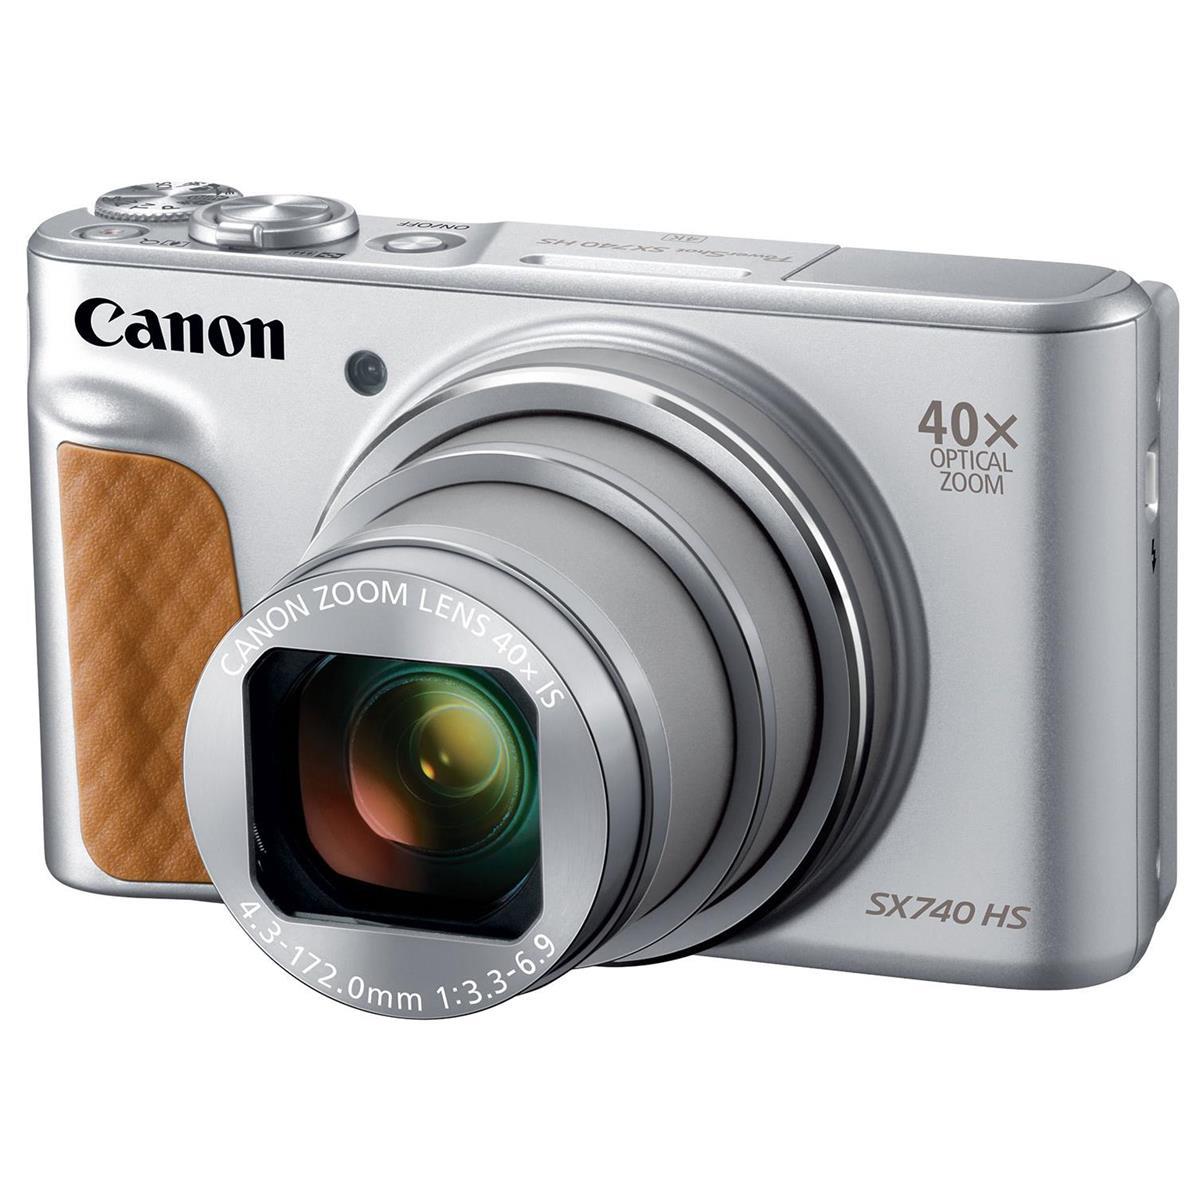 Canon PowerShot SX740 HS Digital Camera, Silver -  2956C001